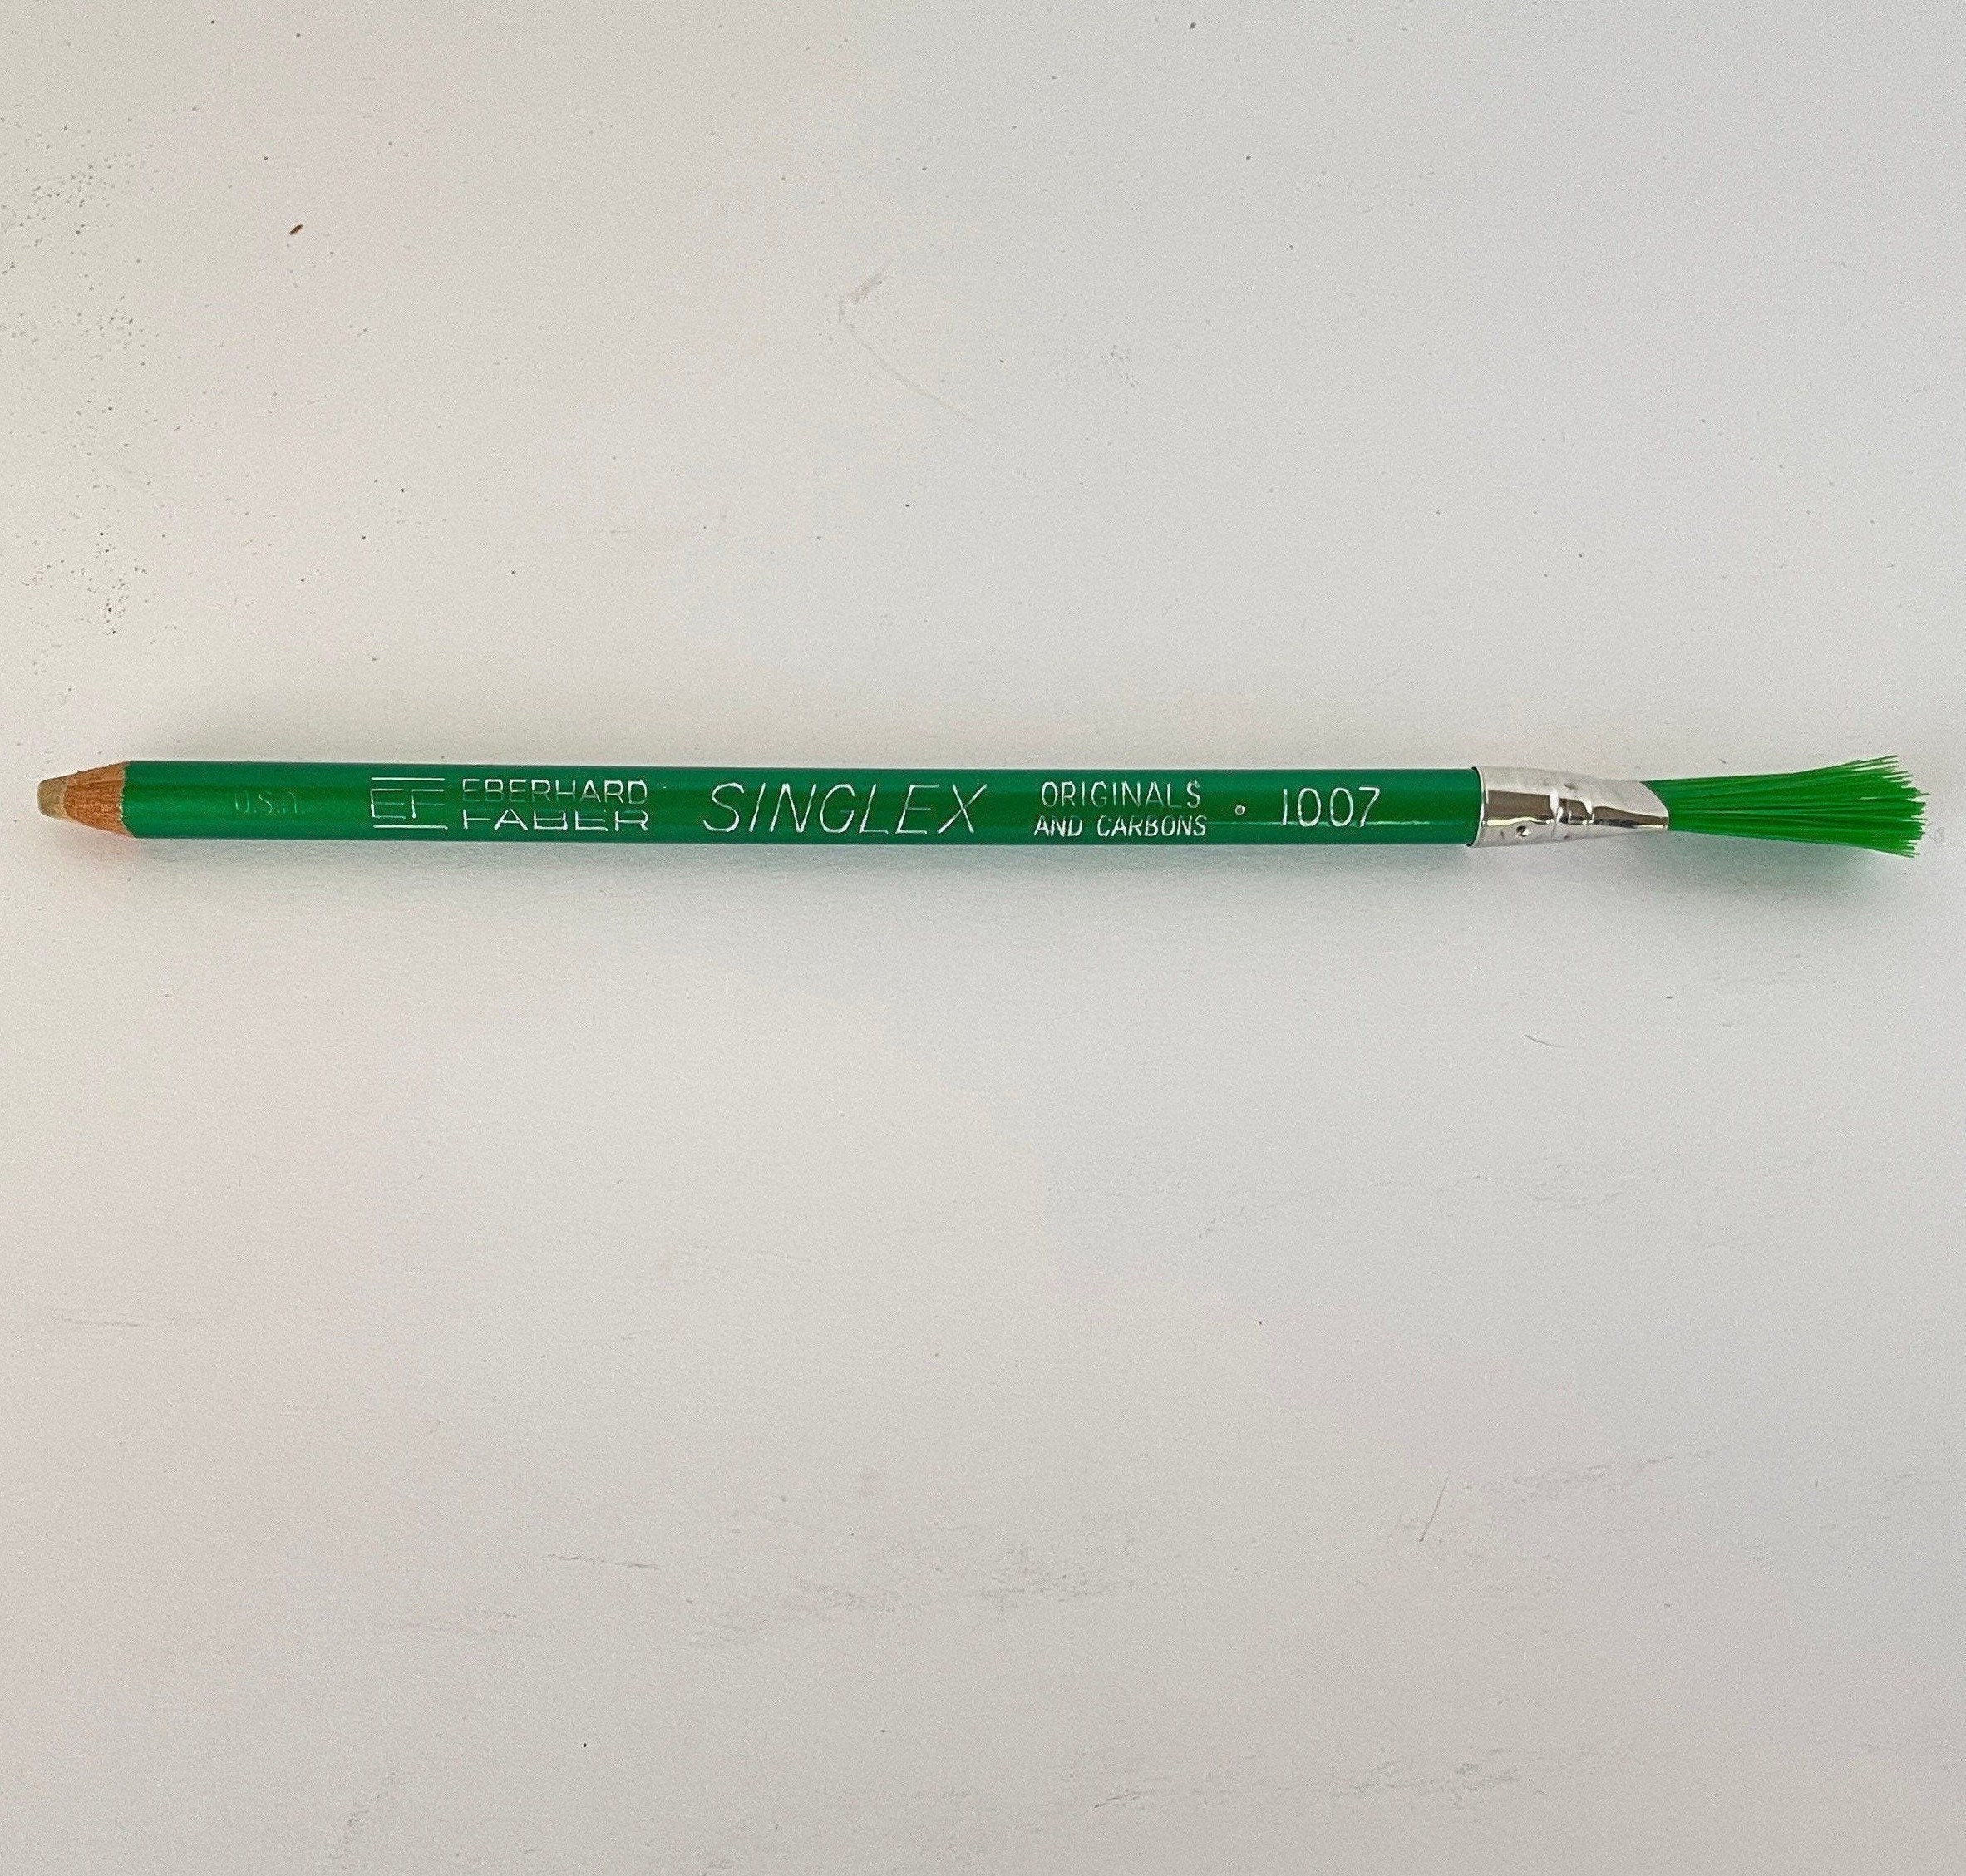 Pencil-style Grip Eraser Retractable Mechanical Eraser Pen With 2